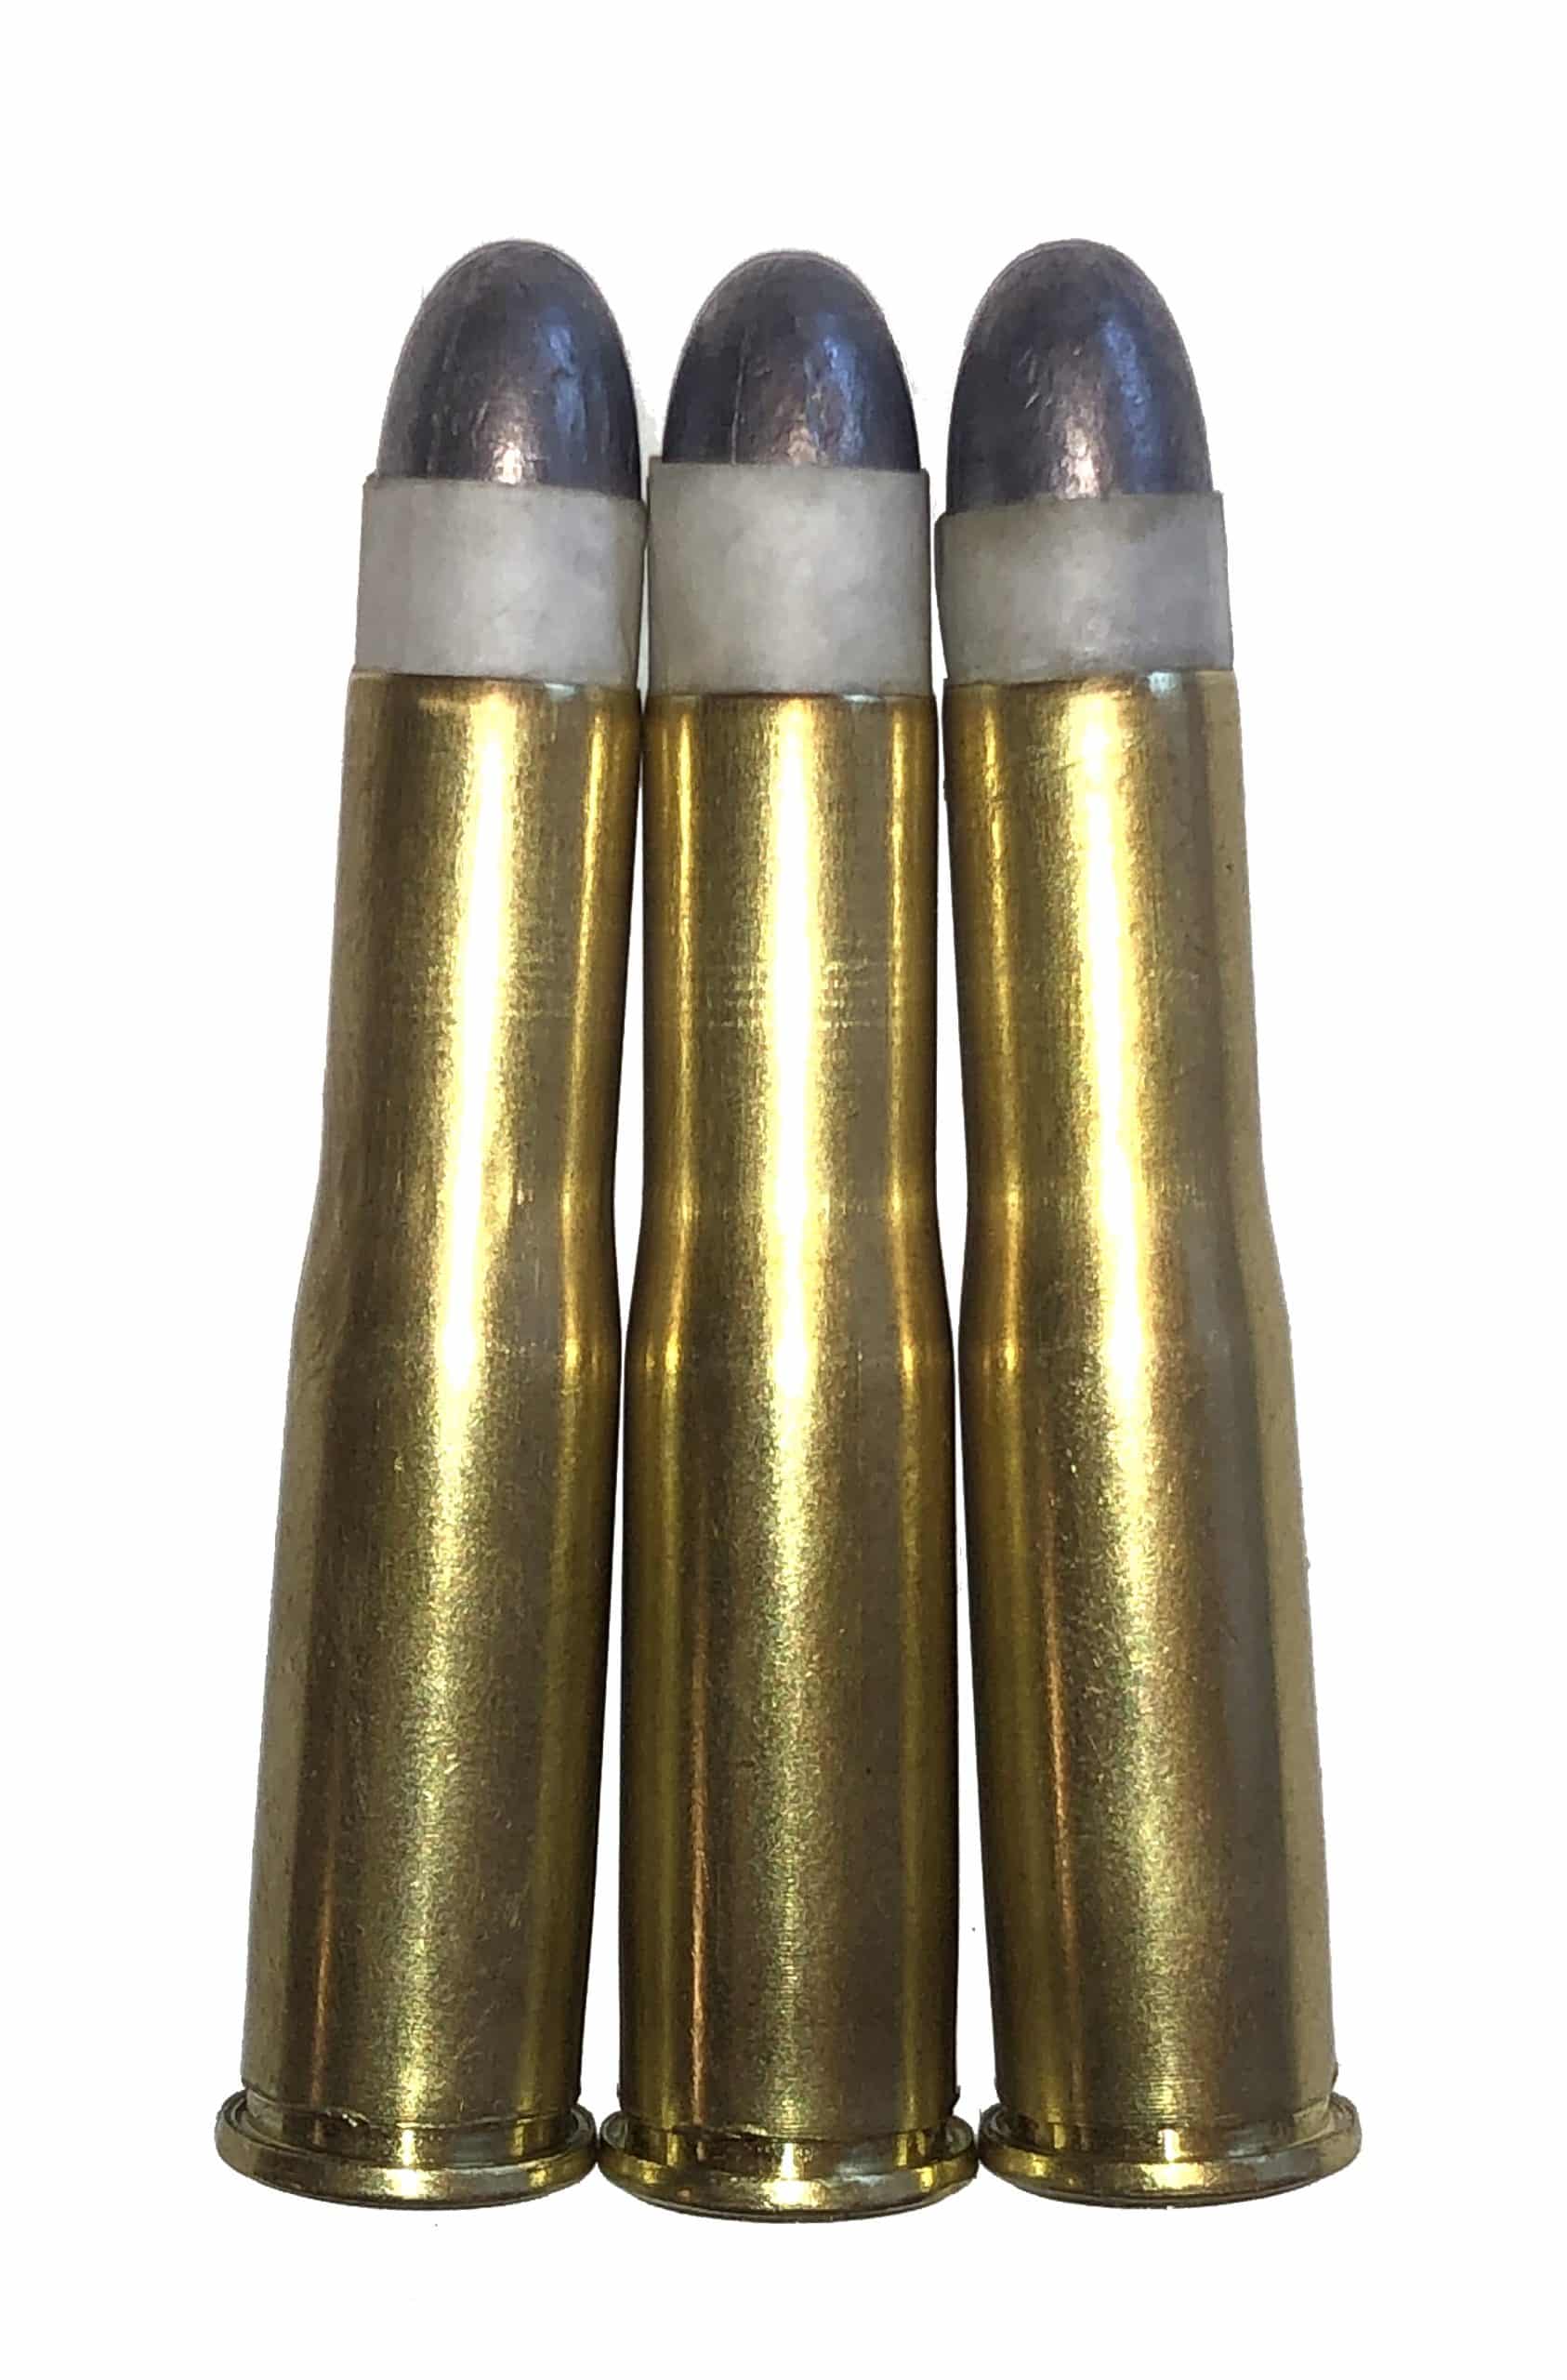 11x60R Murata Dummy rounds Cartridges snap caps fake bullets J&M Spec INERT